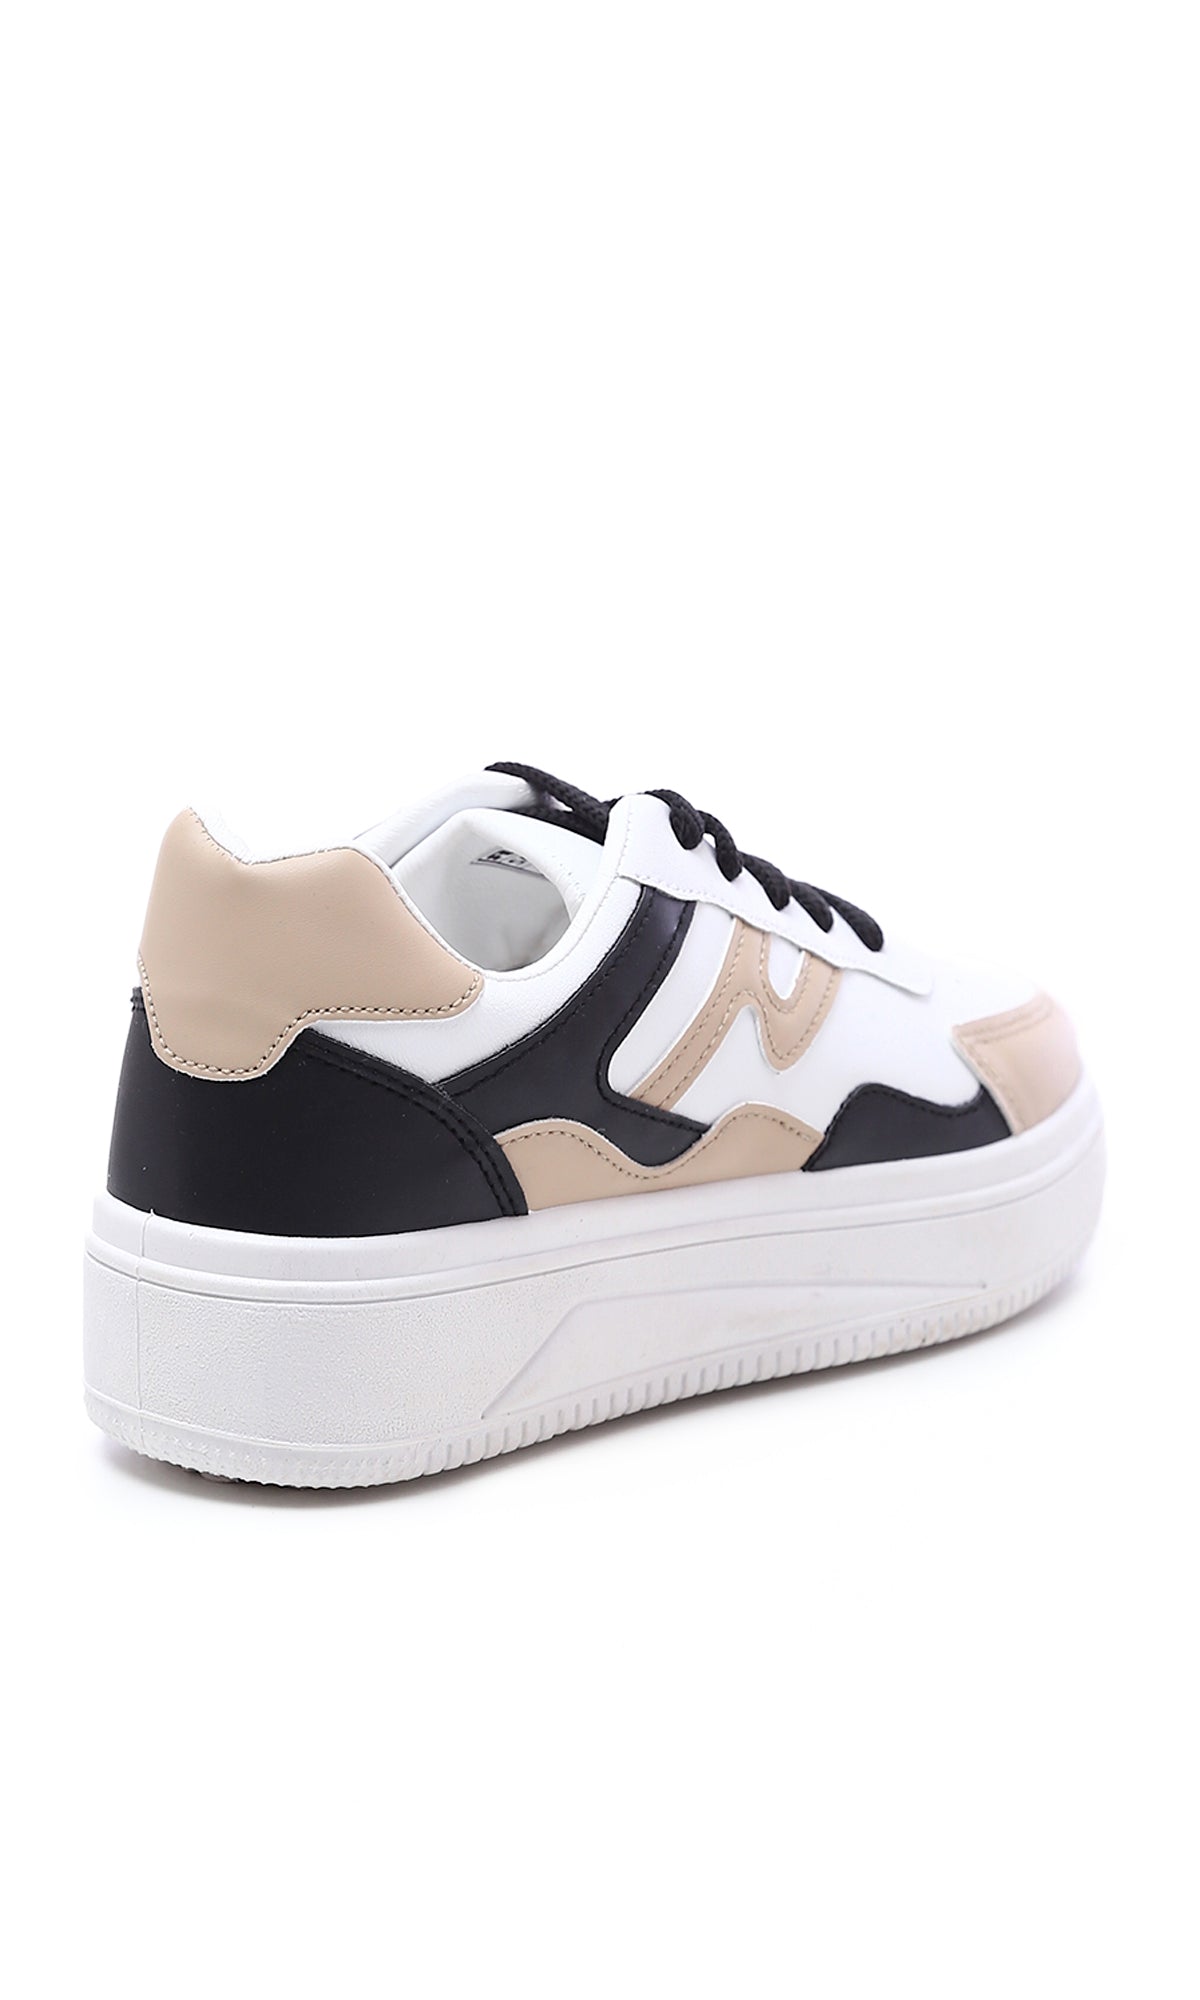 O177893 Tri-Tone Round Toecap Sneakers - White, Black & Beige